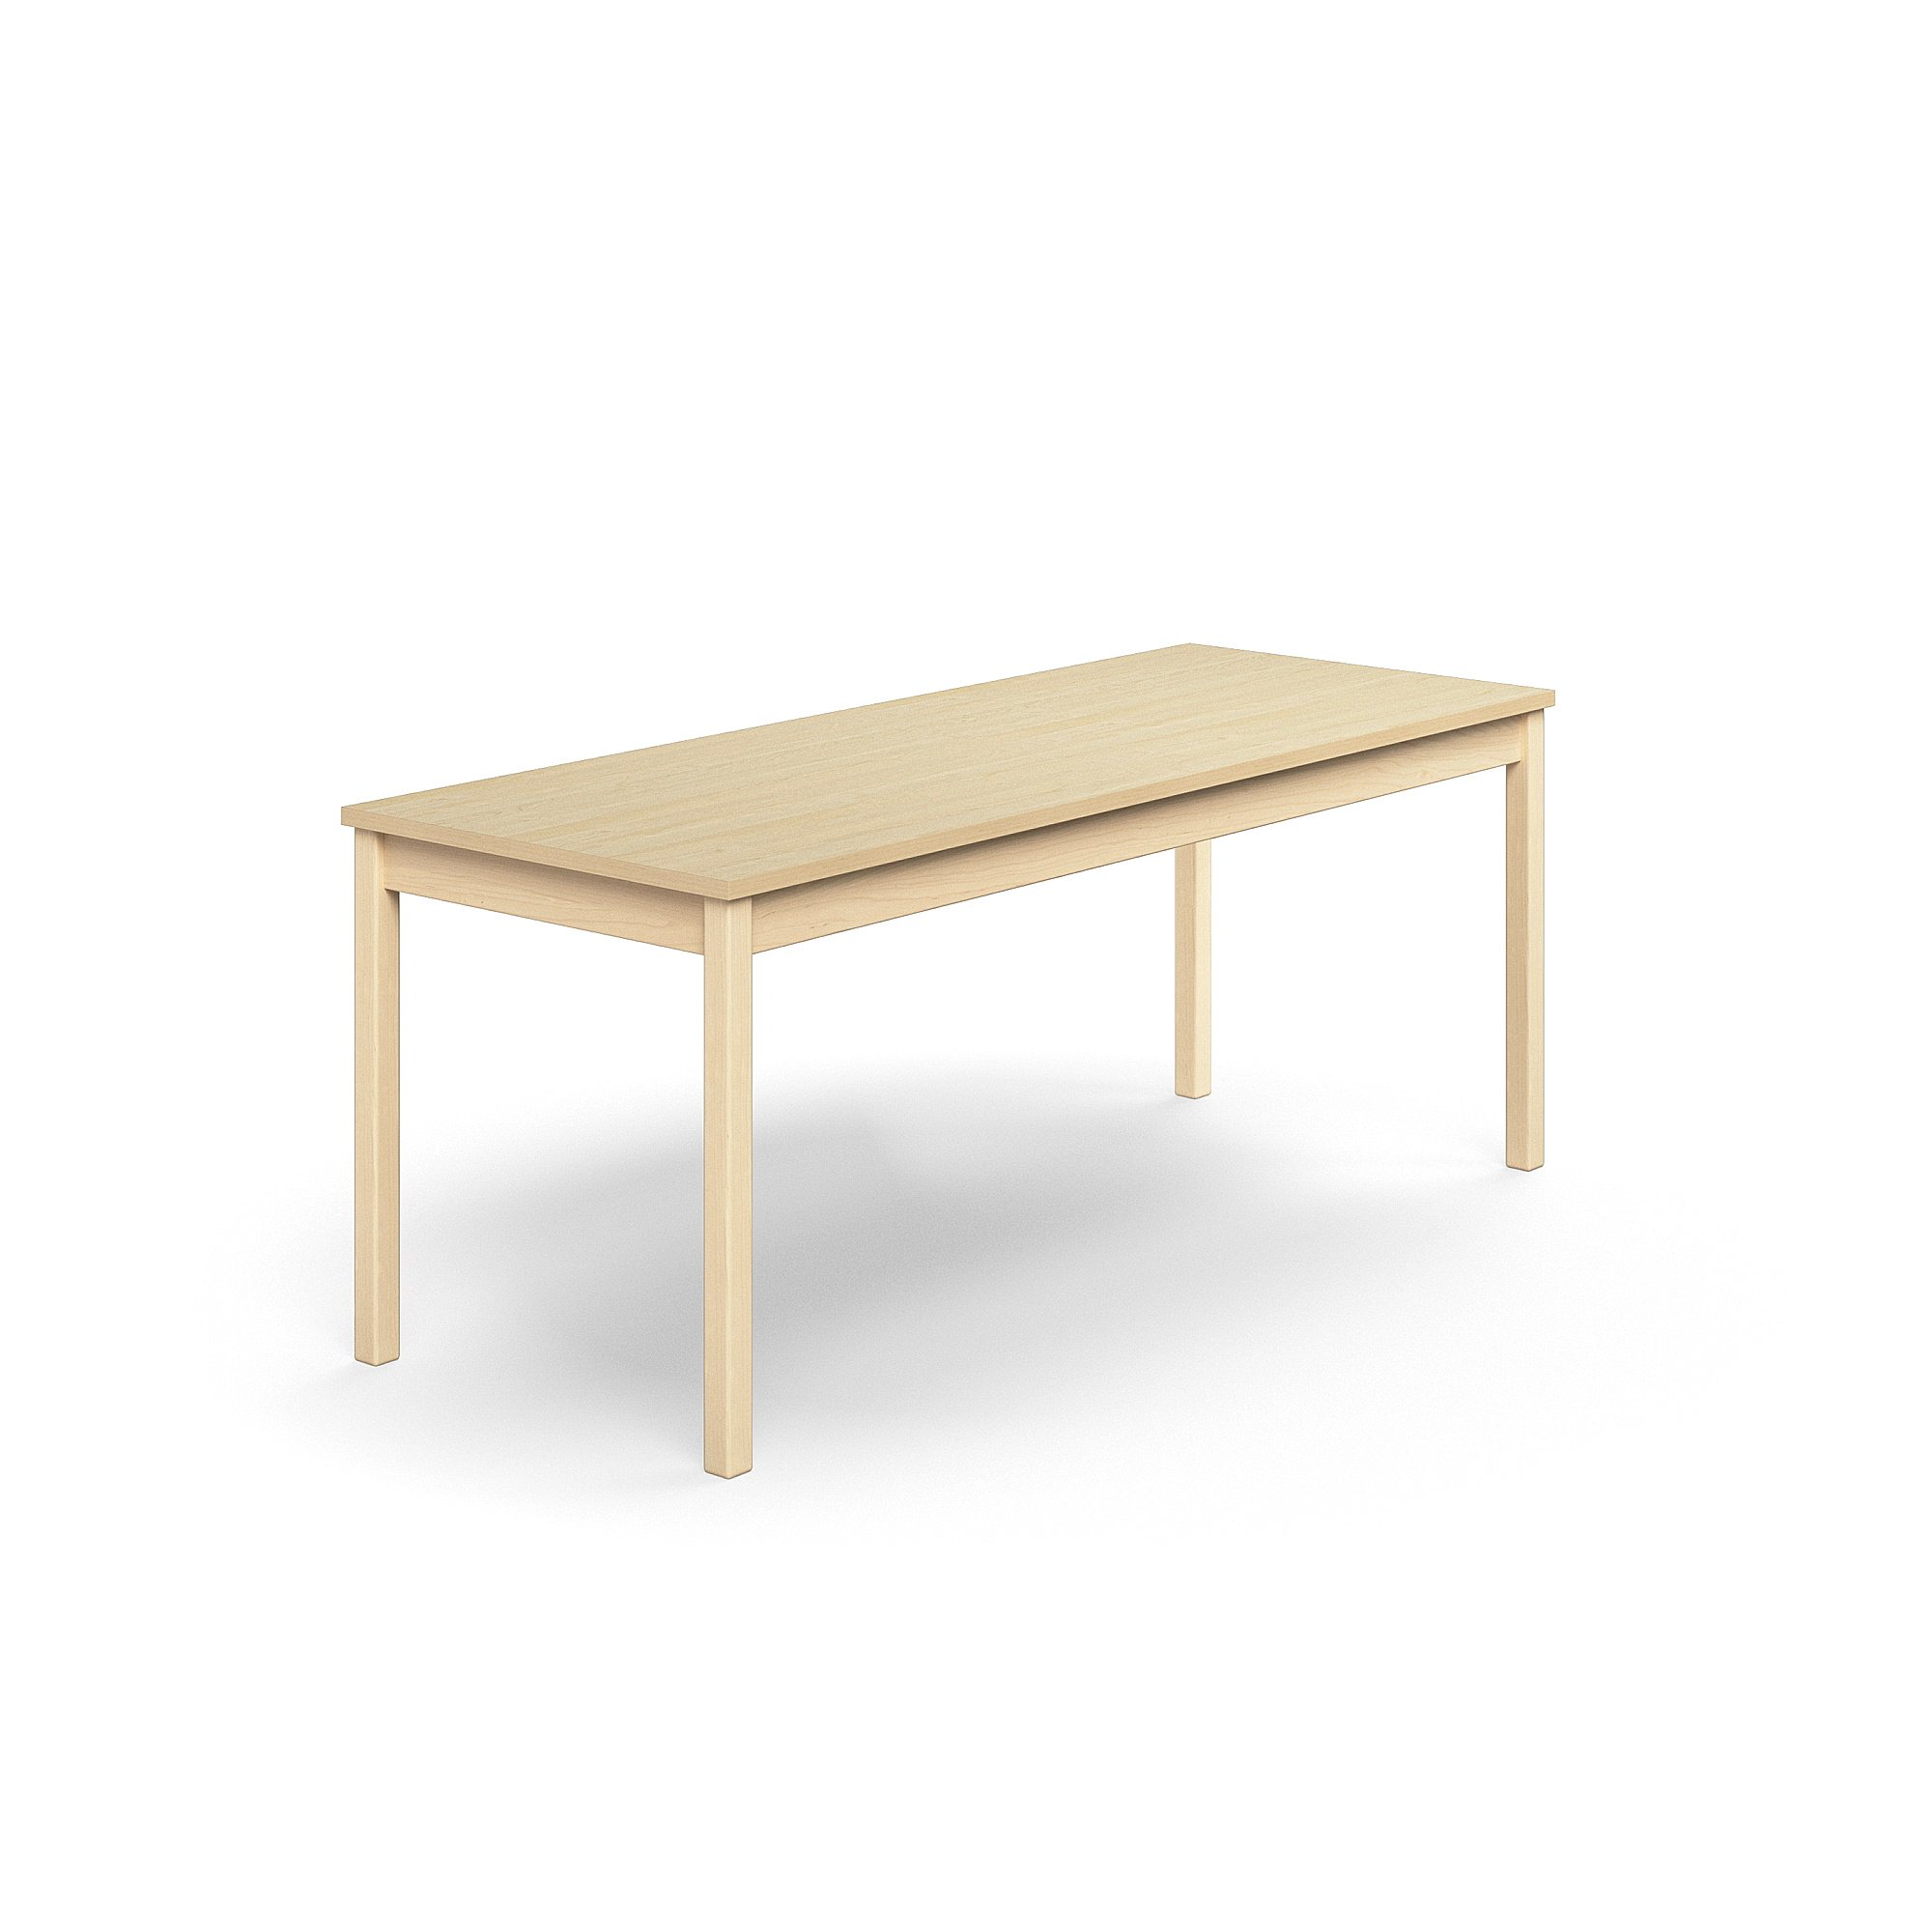 Stôl EUROPA, 1800x700x720 mm, laminát - breza, breza